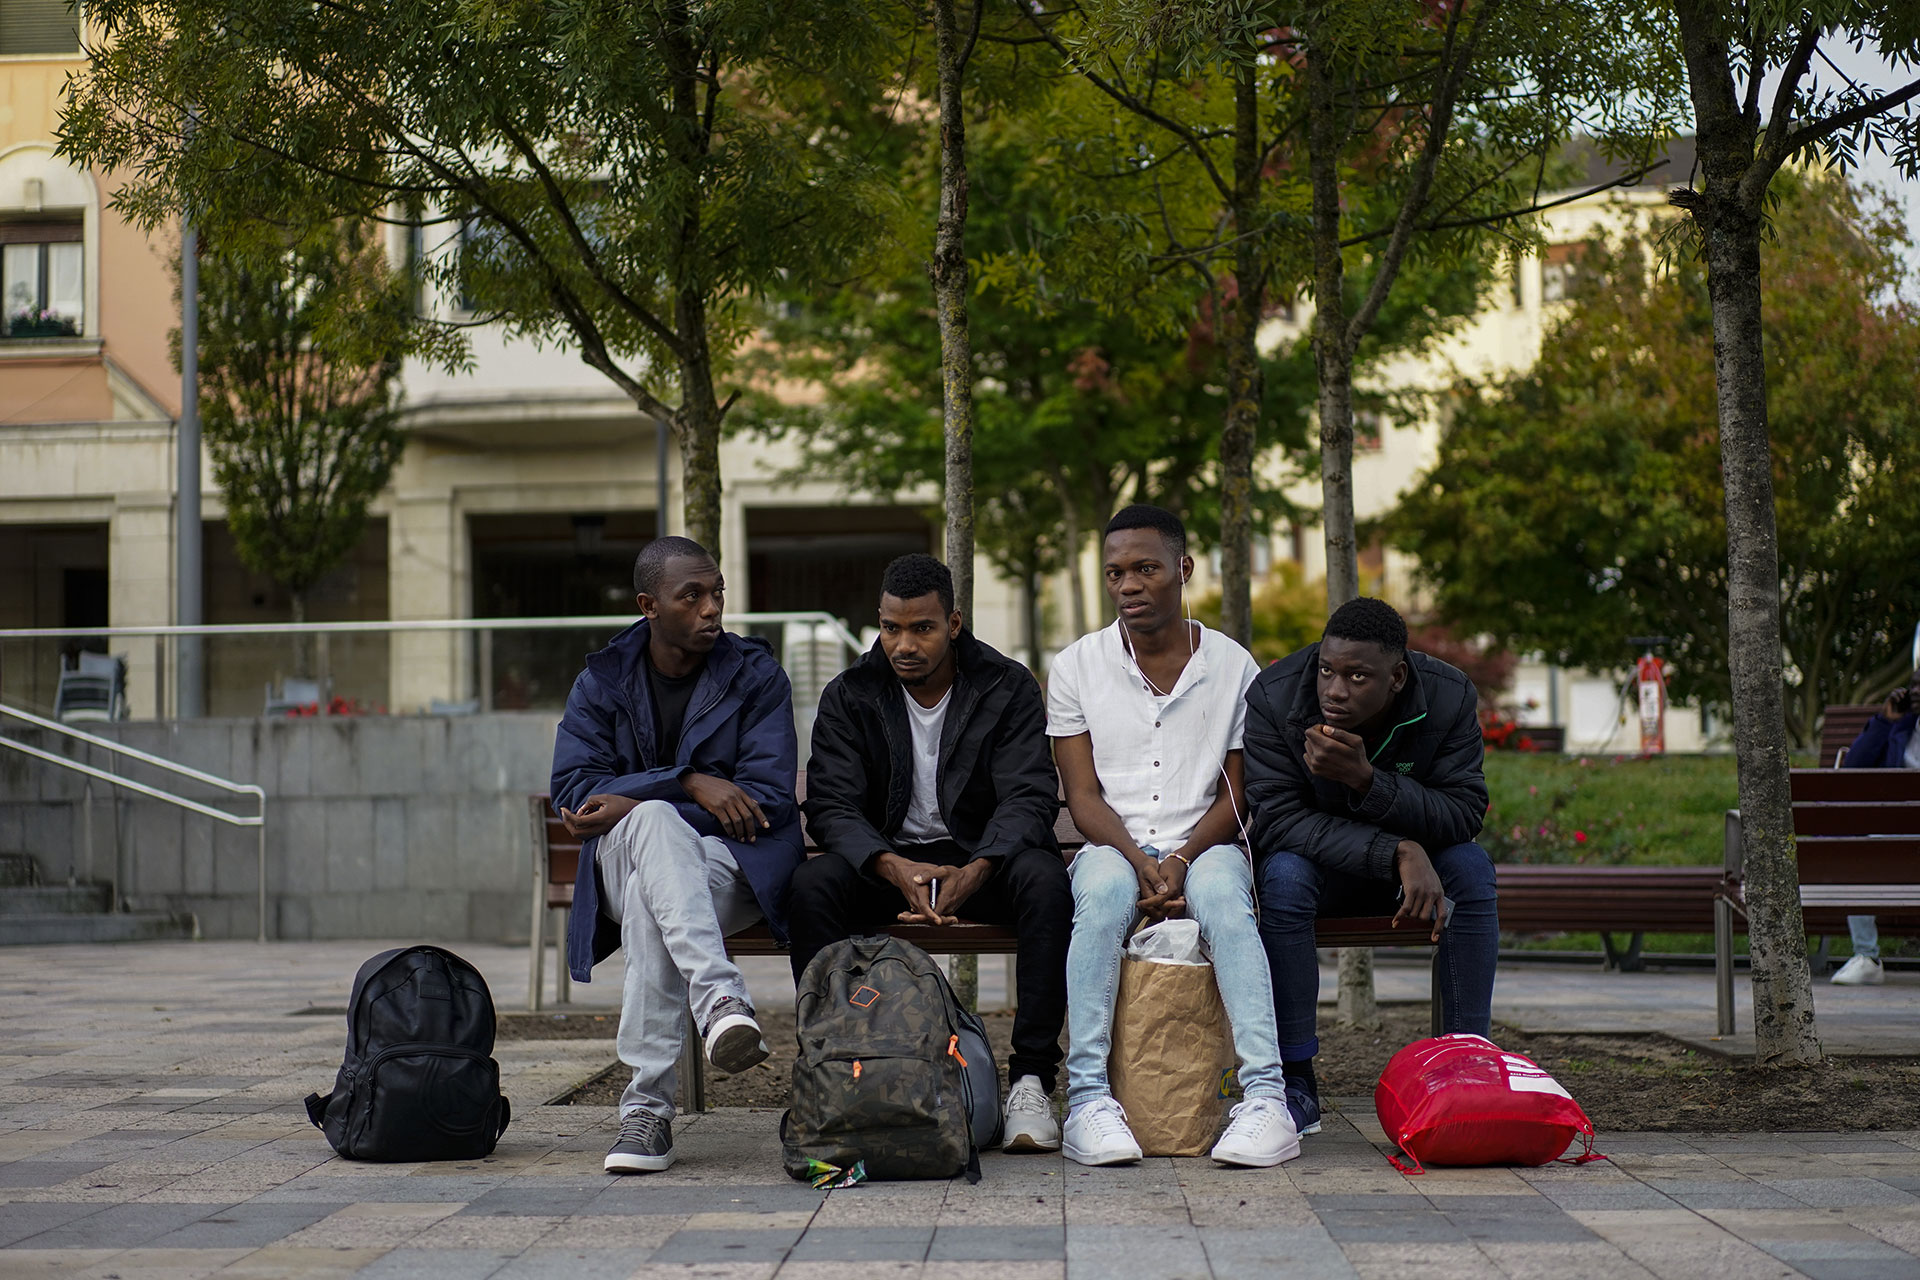 Ousmane espera junto a tres compañeros en una plaza de Irun minutos antes de tomar un autobús para intentar cruzar a Francia, 17 de Septiembre de 2019.